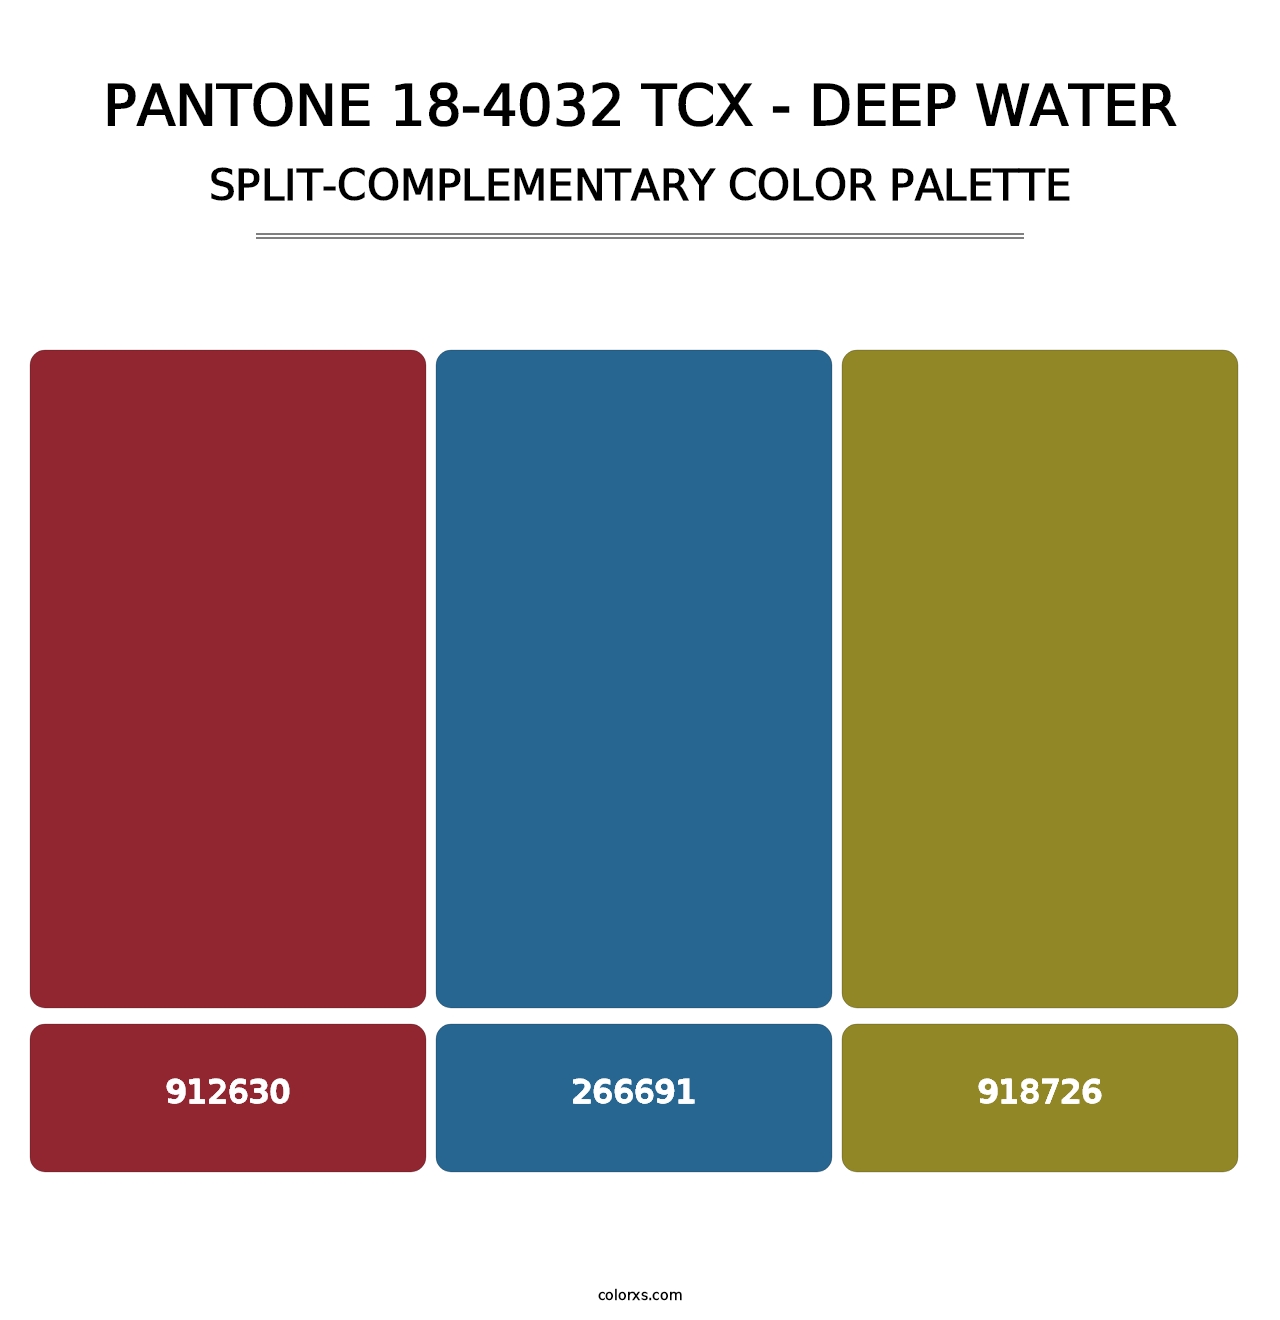 PANTONE 18-4032 TCX - Deep Water - Split-Complementary Color Palette